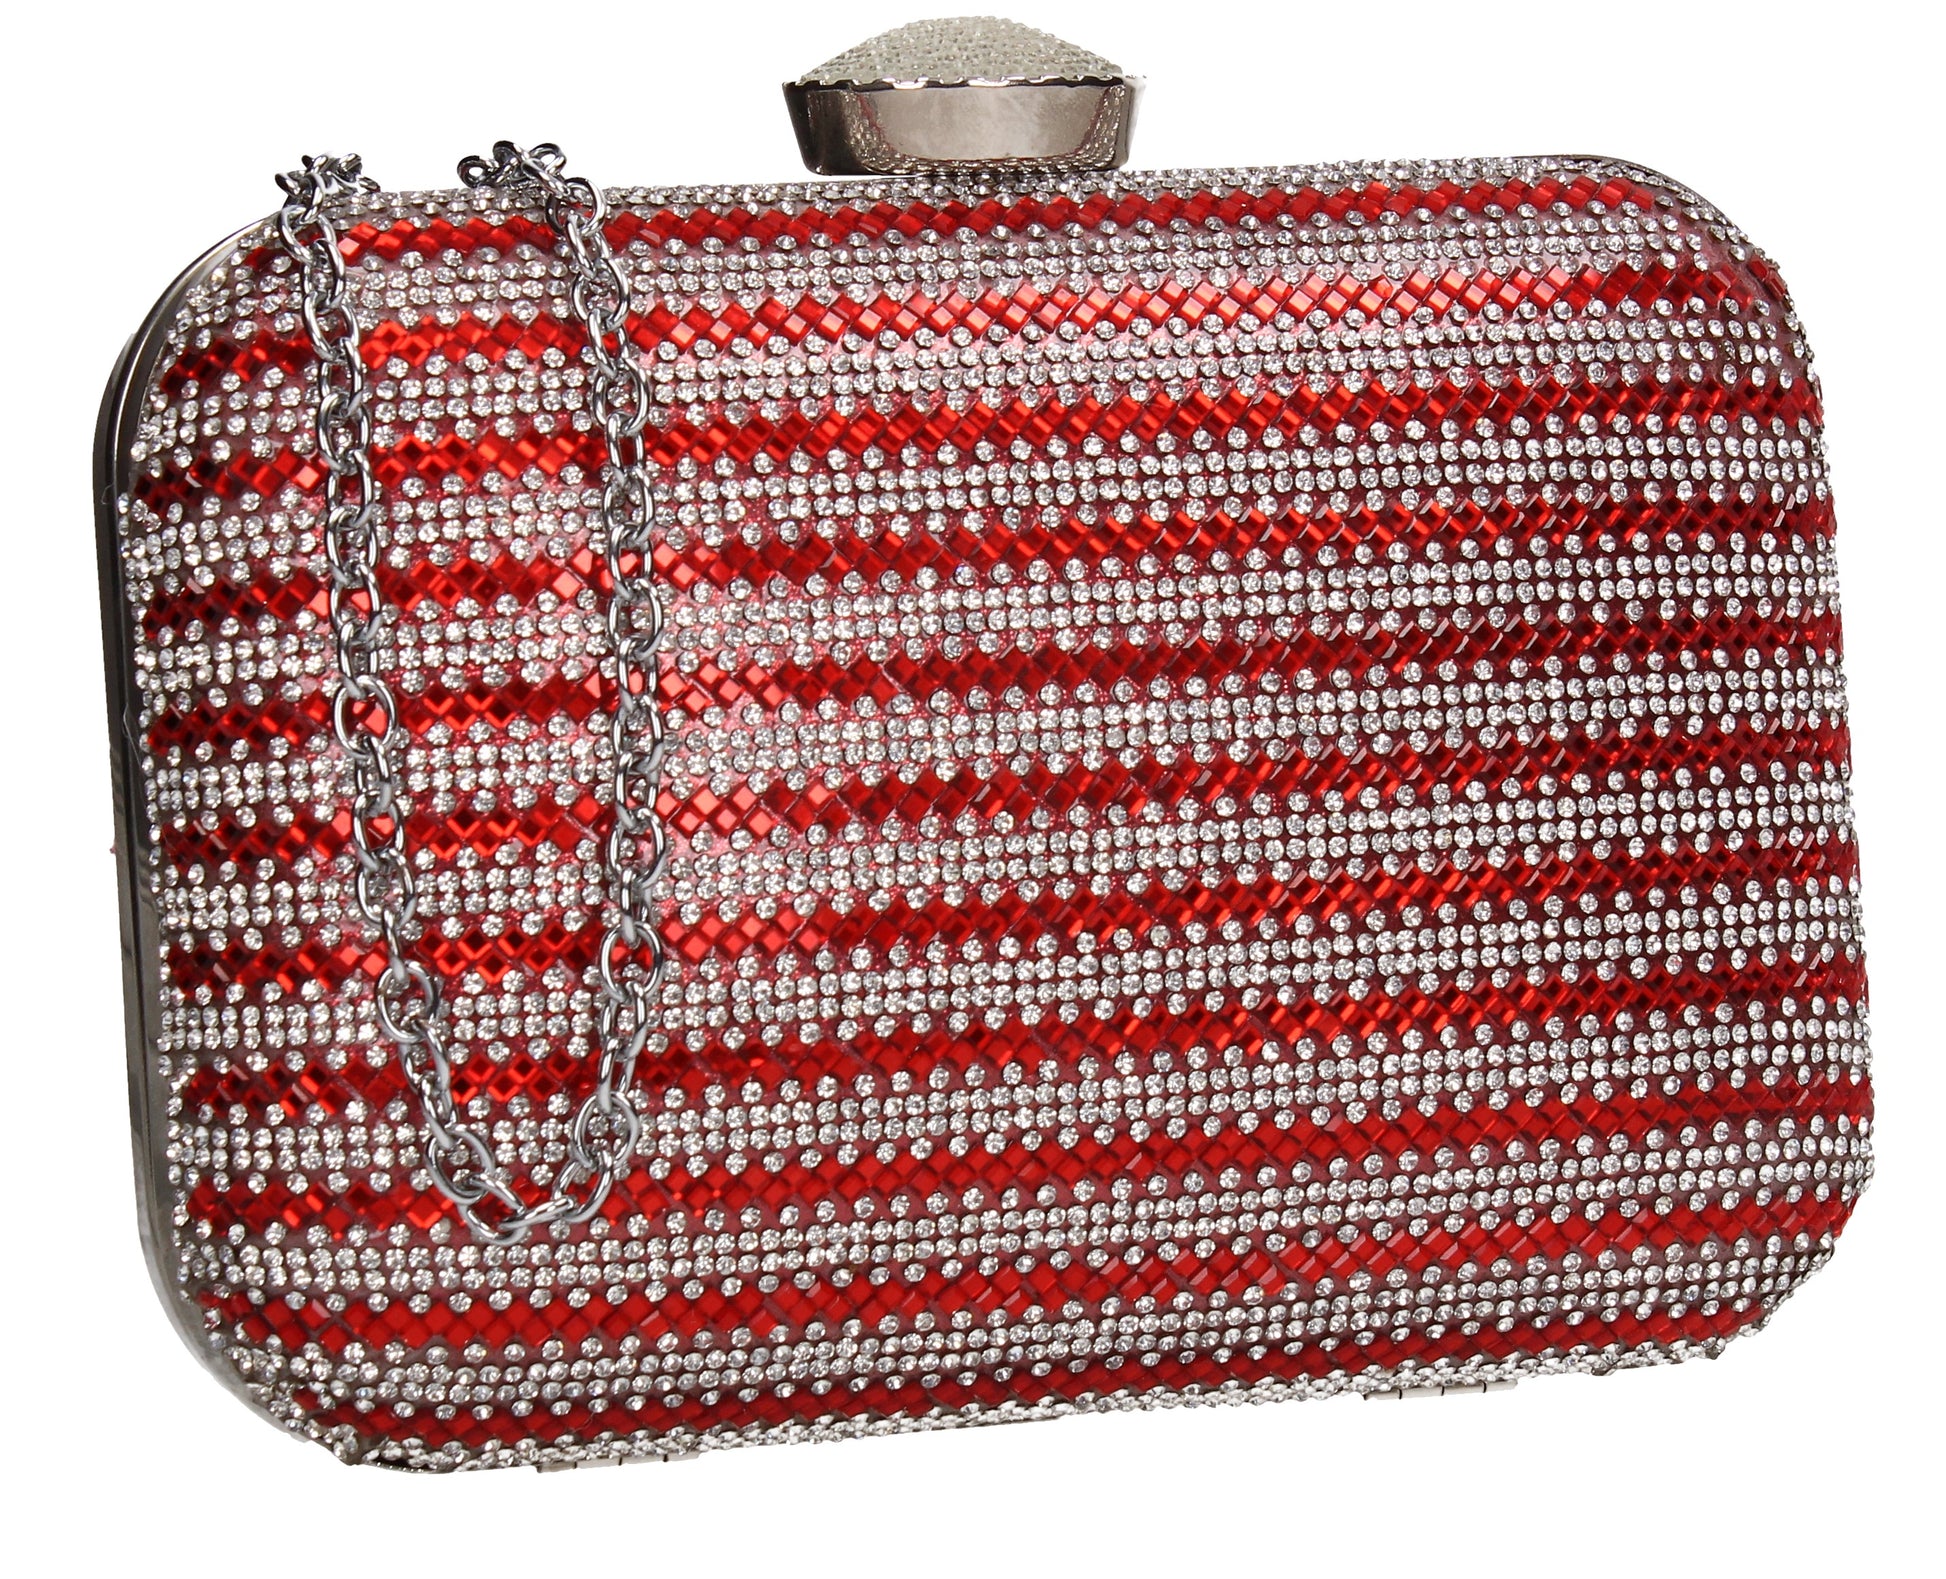 SWANKYSWANS Jane Clutch Bag Red Cute Cheap Clutch Bag For Weddings School and Work